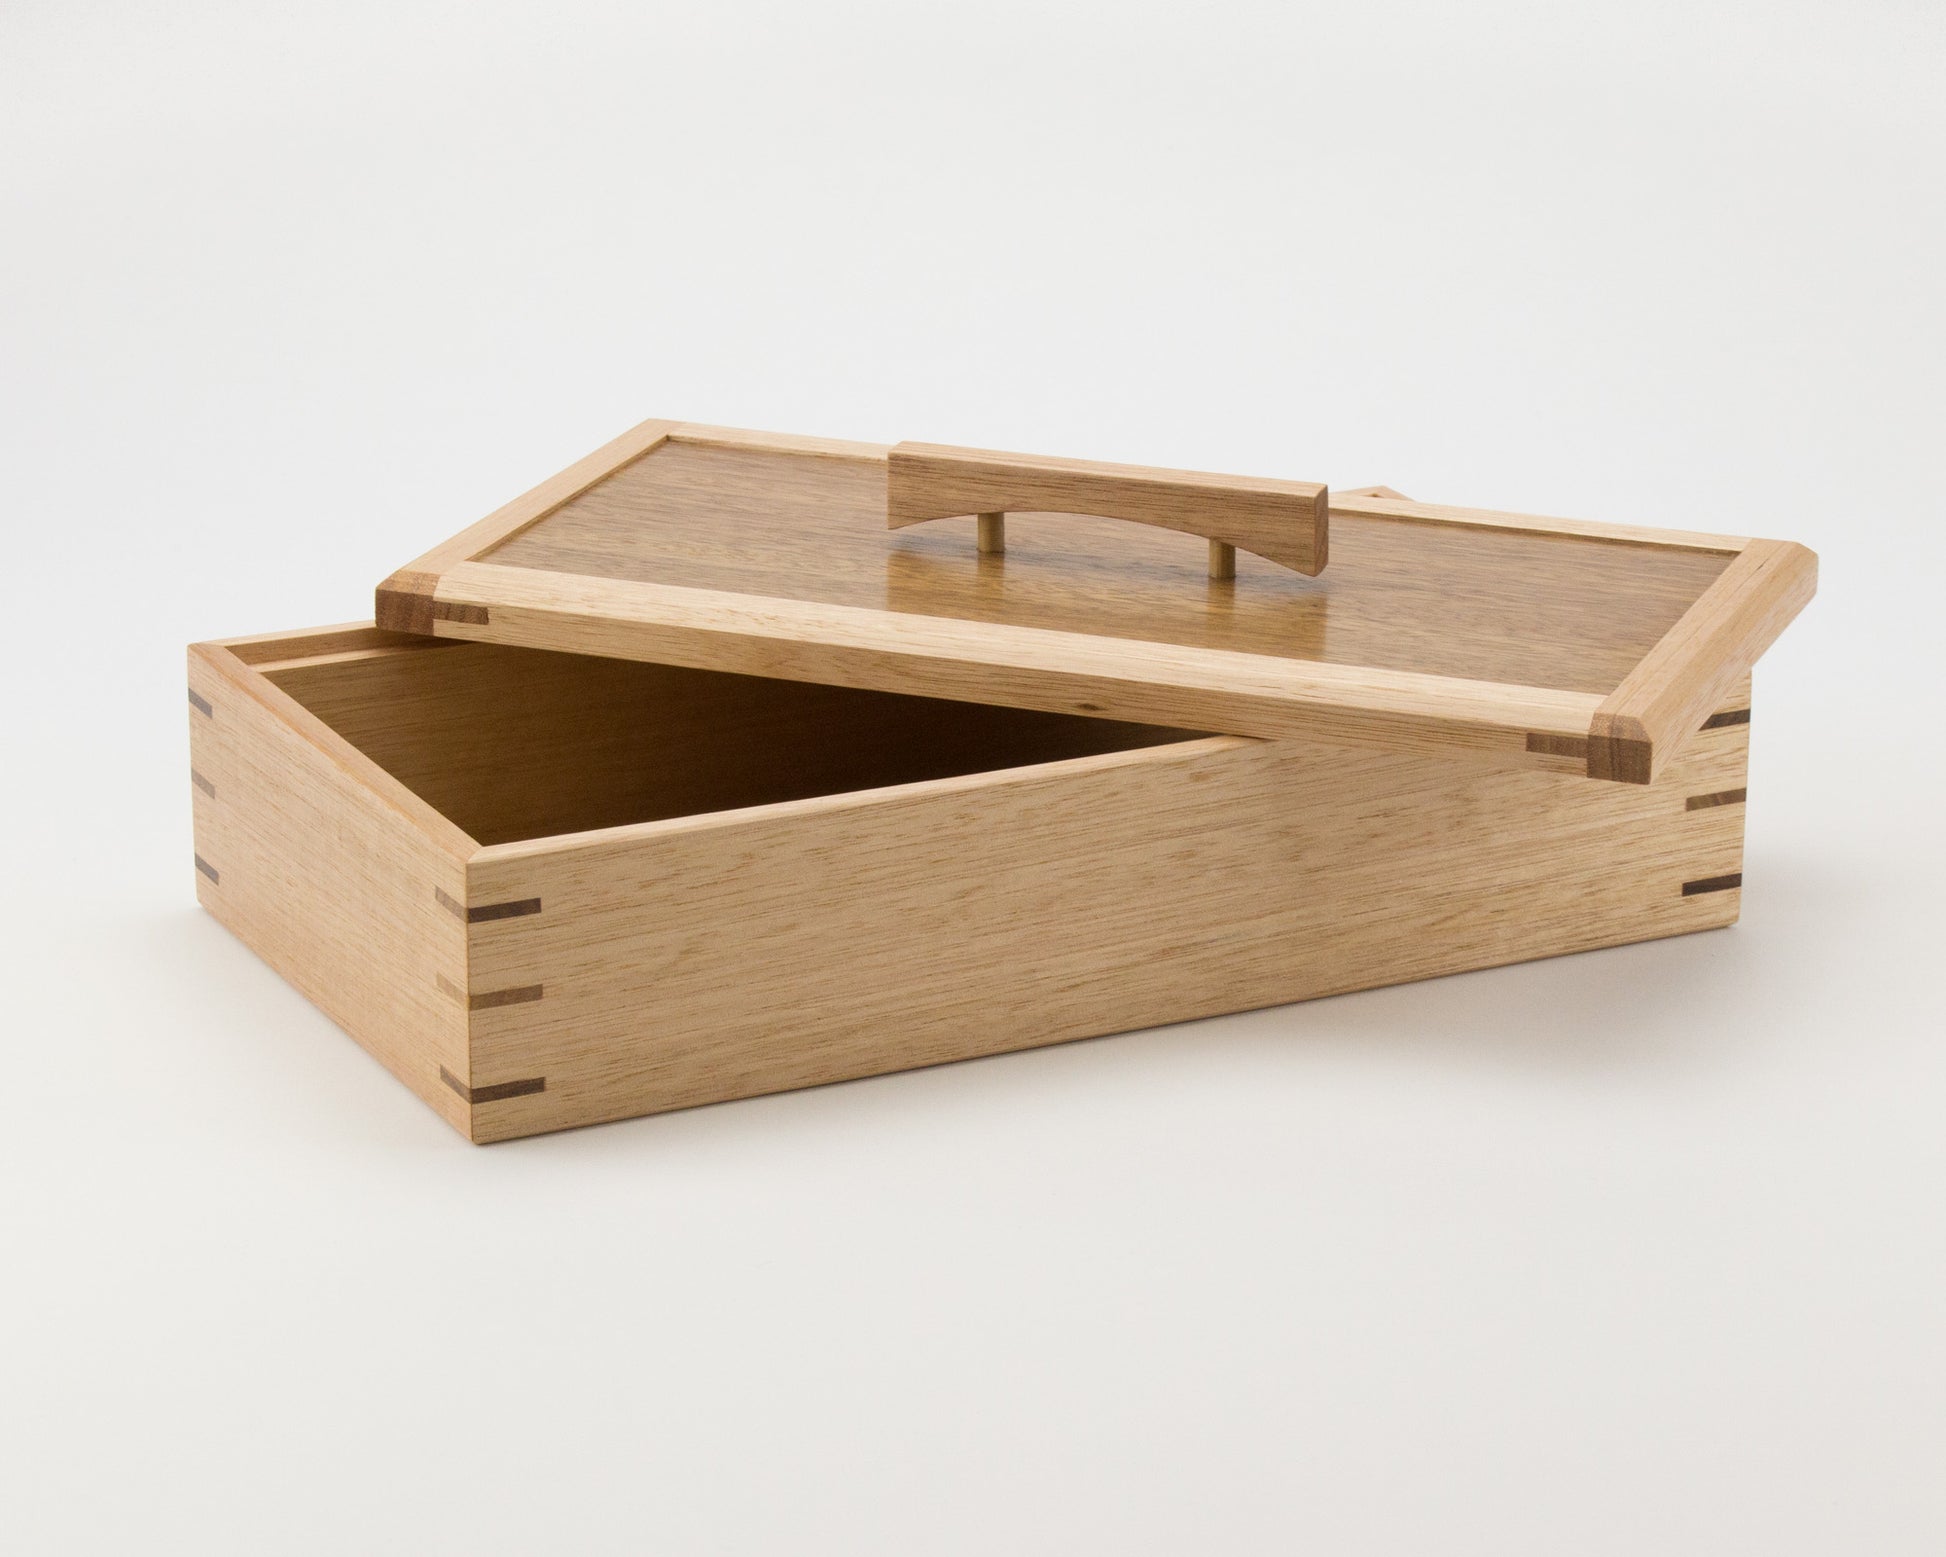 Wooden Keepsake Box handcrafted from Tasmanian Oak & Spotted Gum